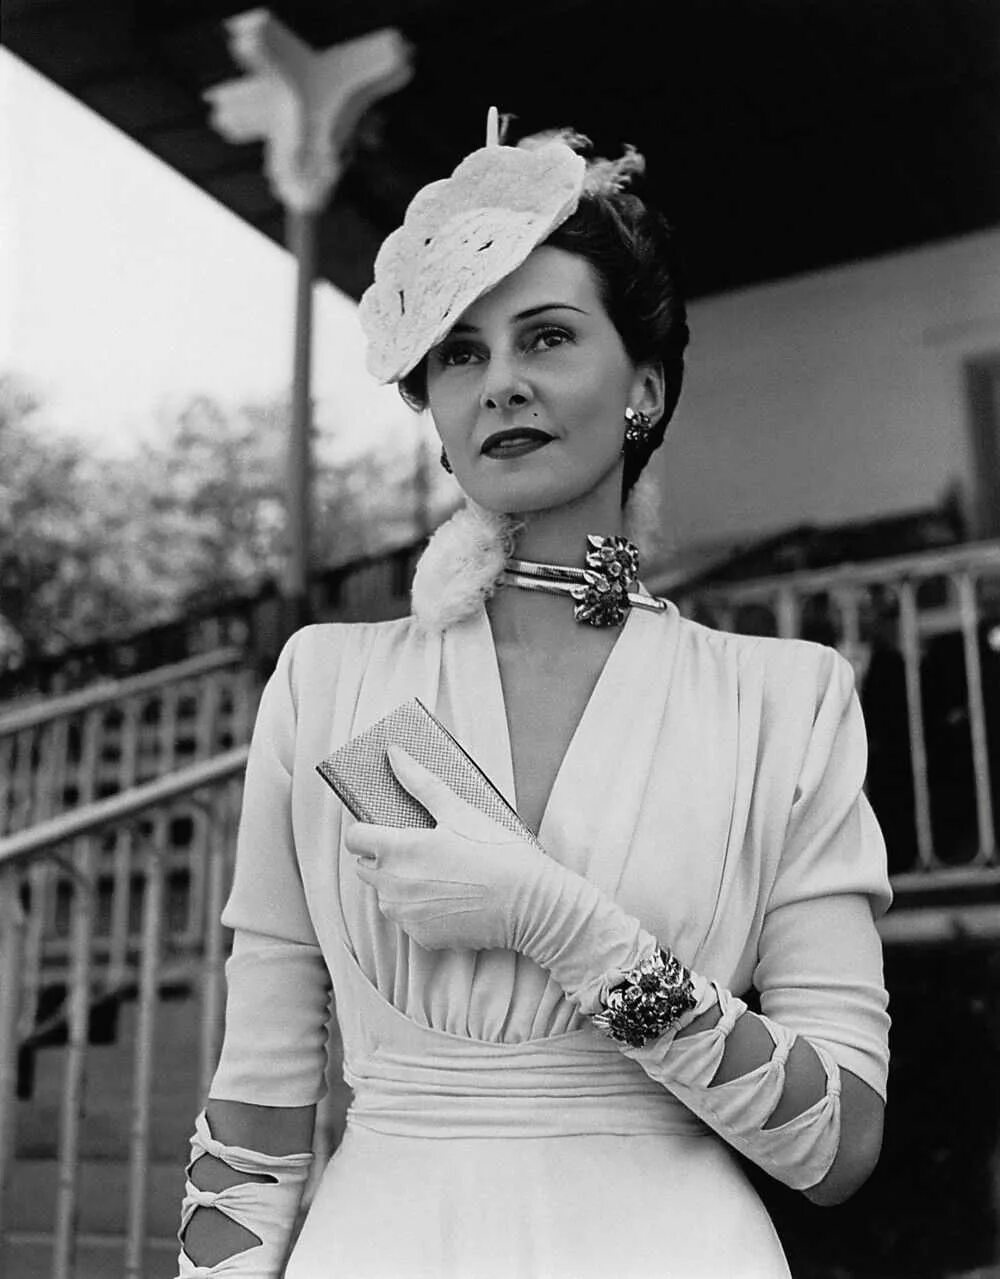 В 20 годы был стиль. Элен Арпельс. 30е Америка мода. Мода Англия 30е годы. Мода 1930е женщины.